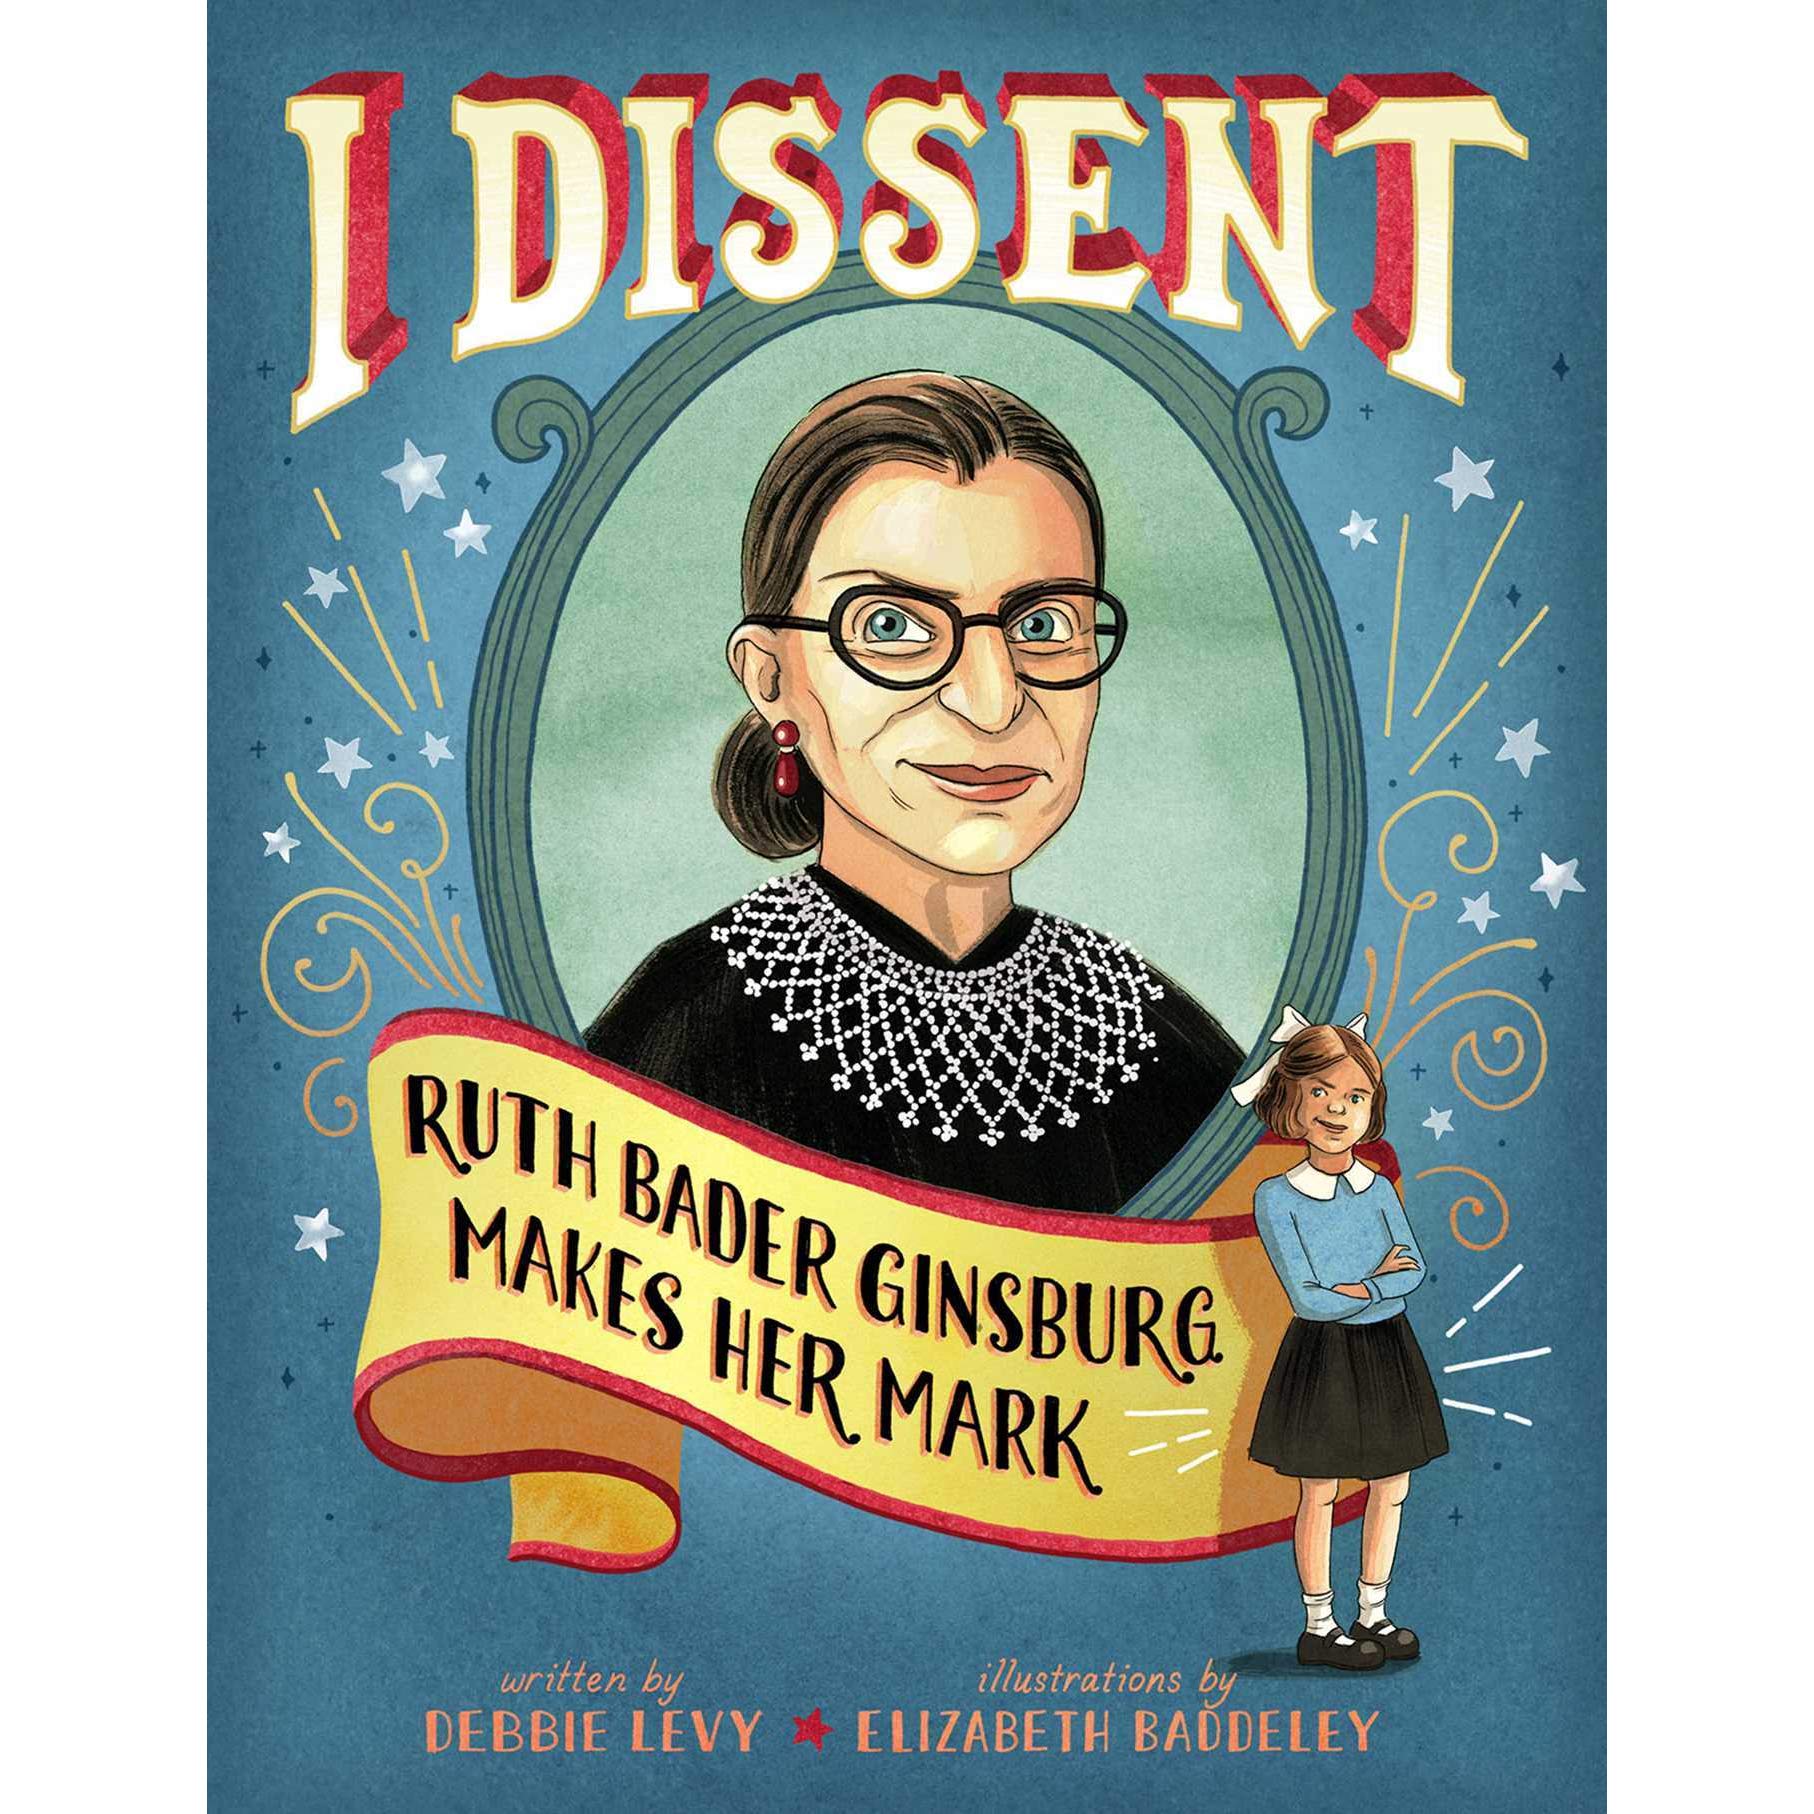 I Dissent: Ruth Bader Ginsburg Makes Her Mark Hardcover by Debbie Levy & Elizabeth Baddeley, $12 @amazon.com